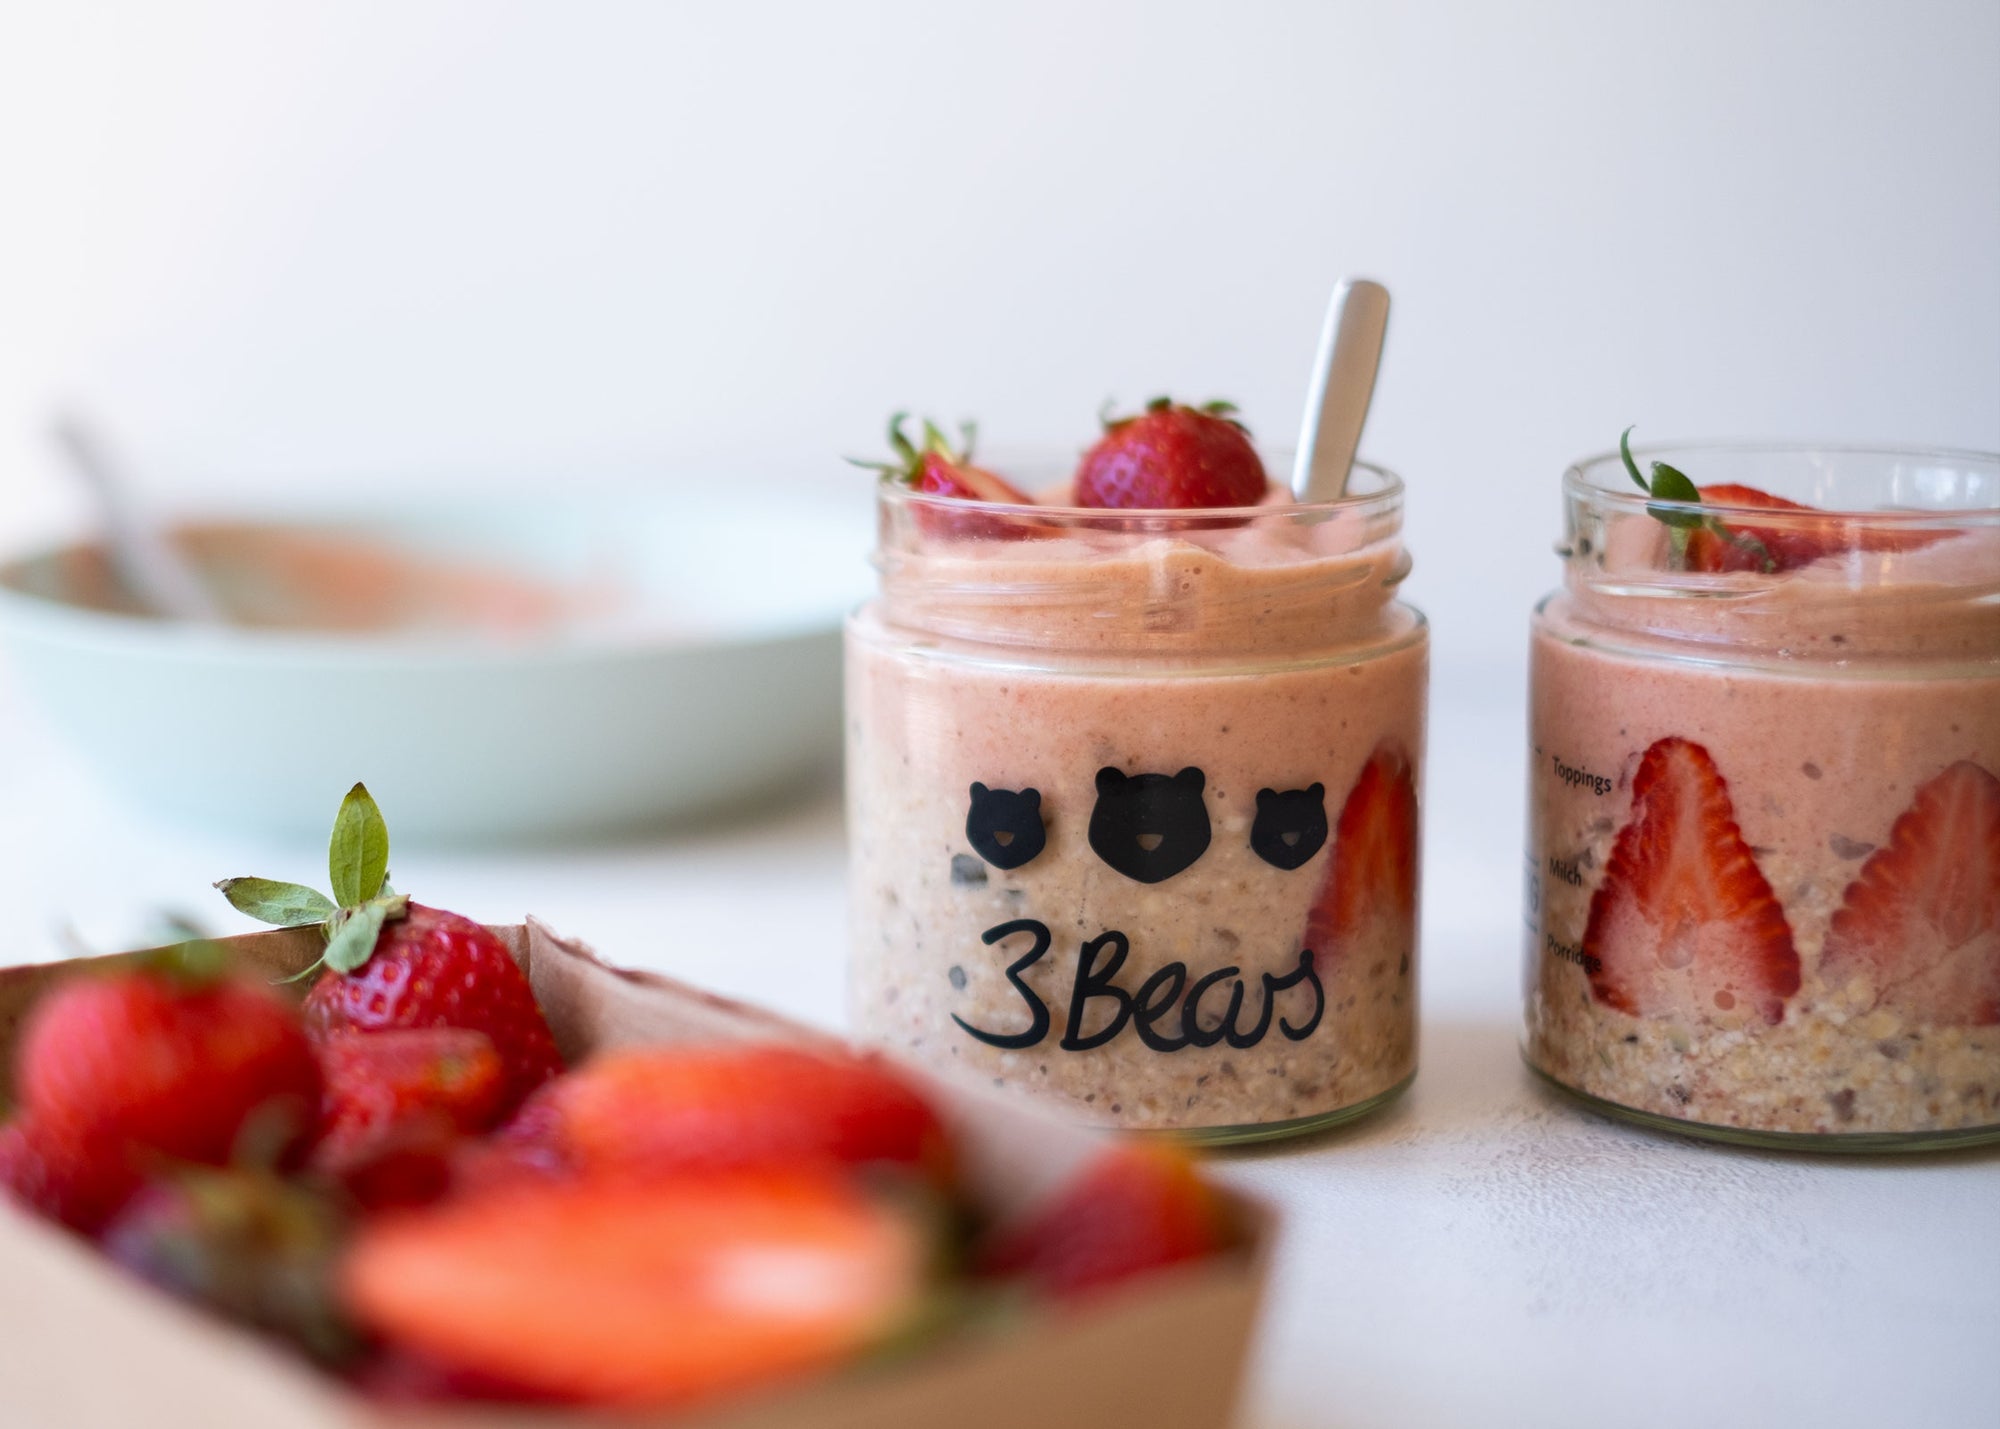 Erdbeer-Overnight Oats, overnight oats, kaltes porridge, frühstück, gesundes frühstück, frühstück mit erdbeeren, porridge im sommer, erdbeeren, recihhaltiges und gesundes frühstück 